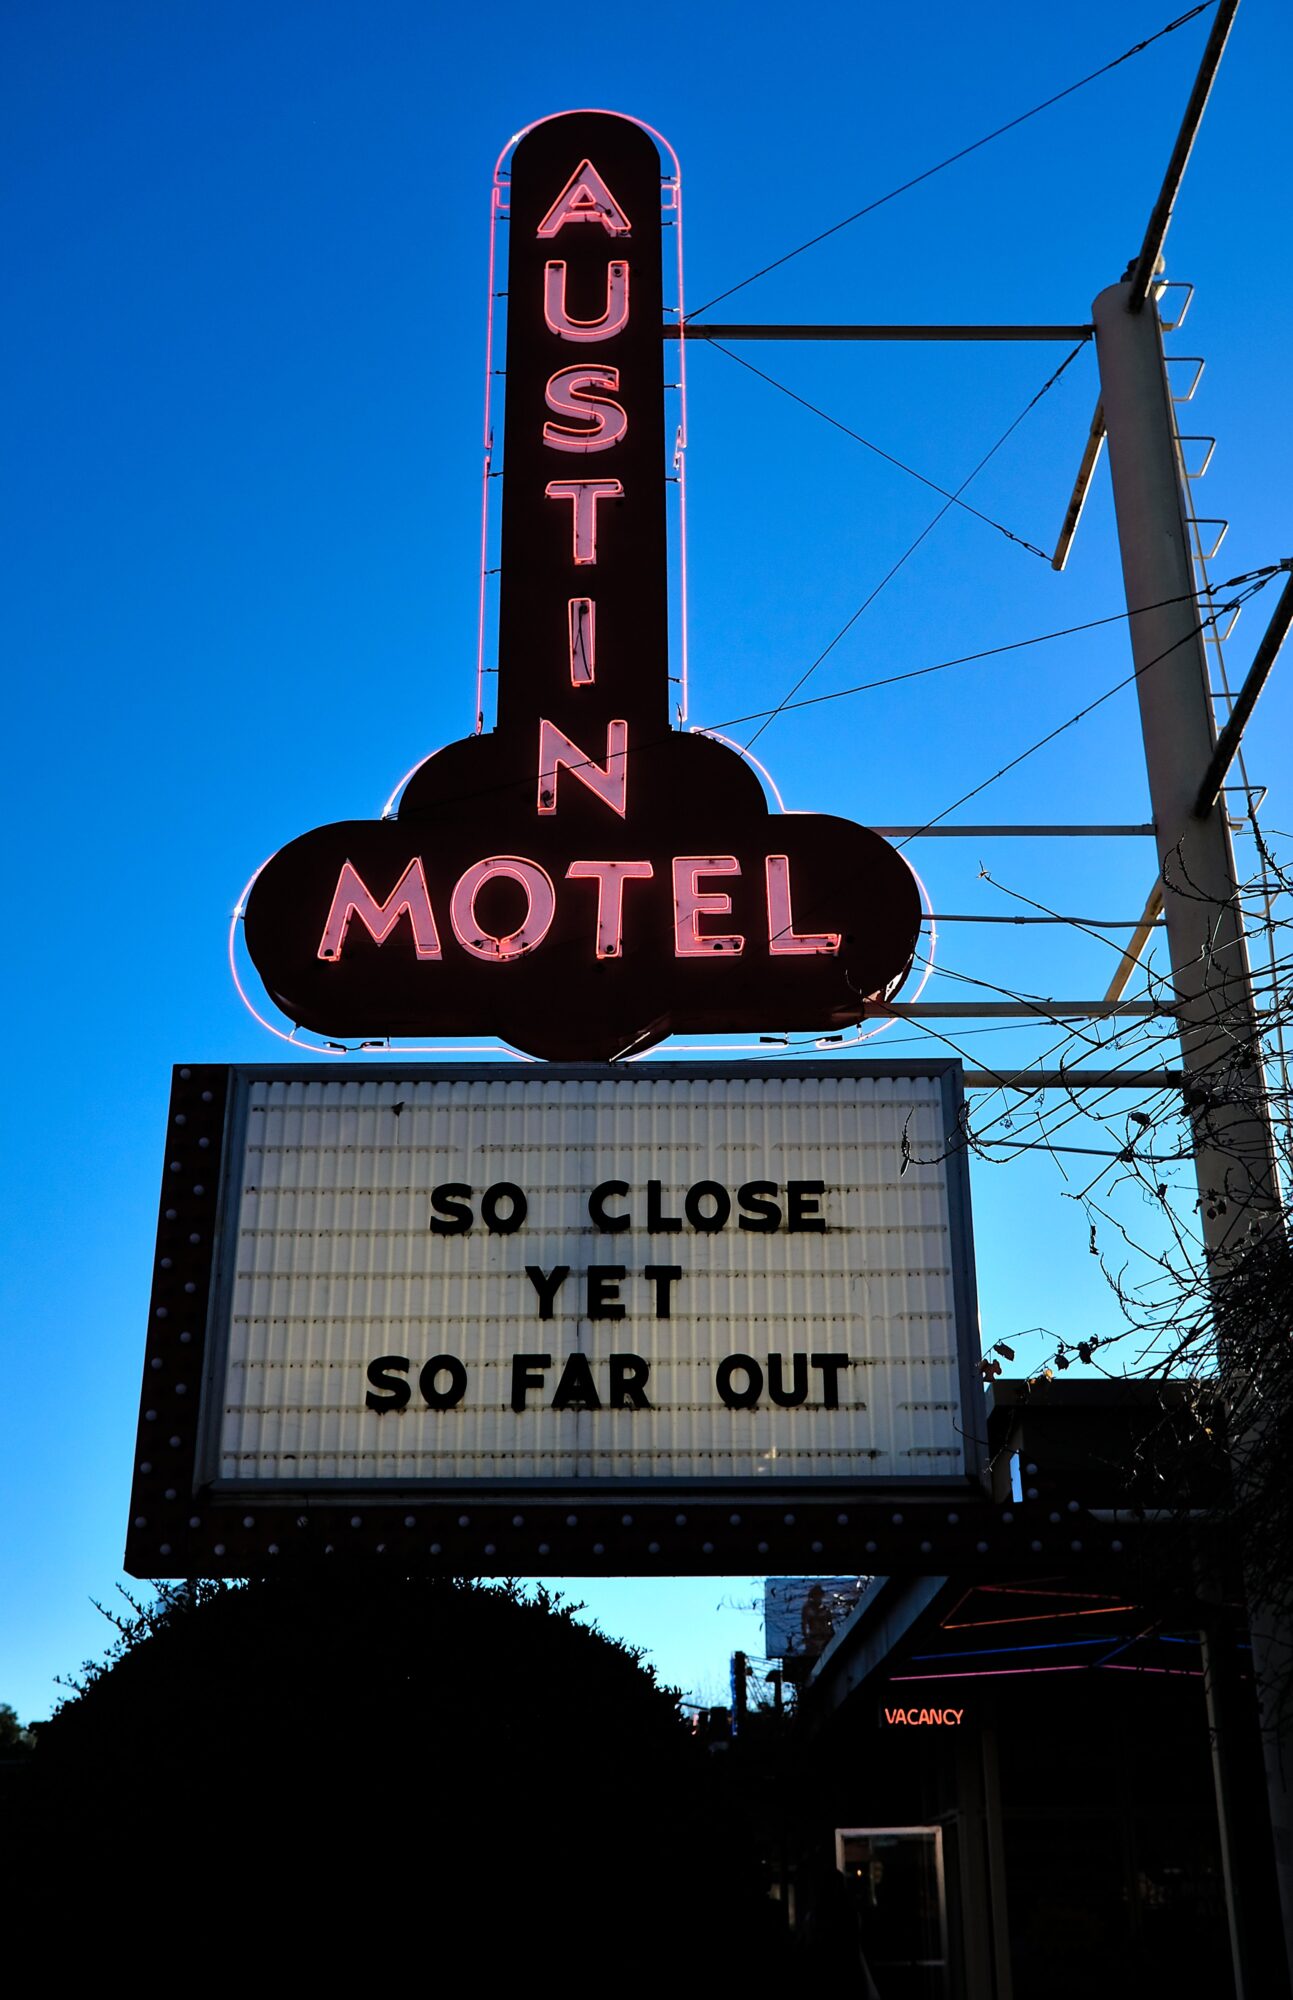 The Austin Motel sign